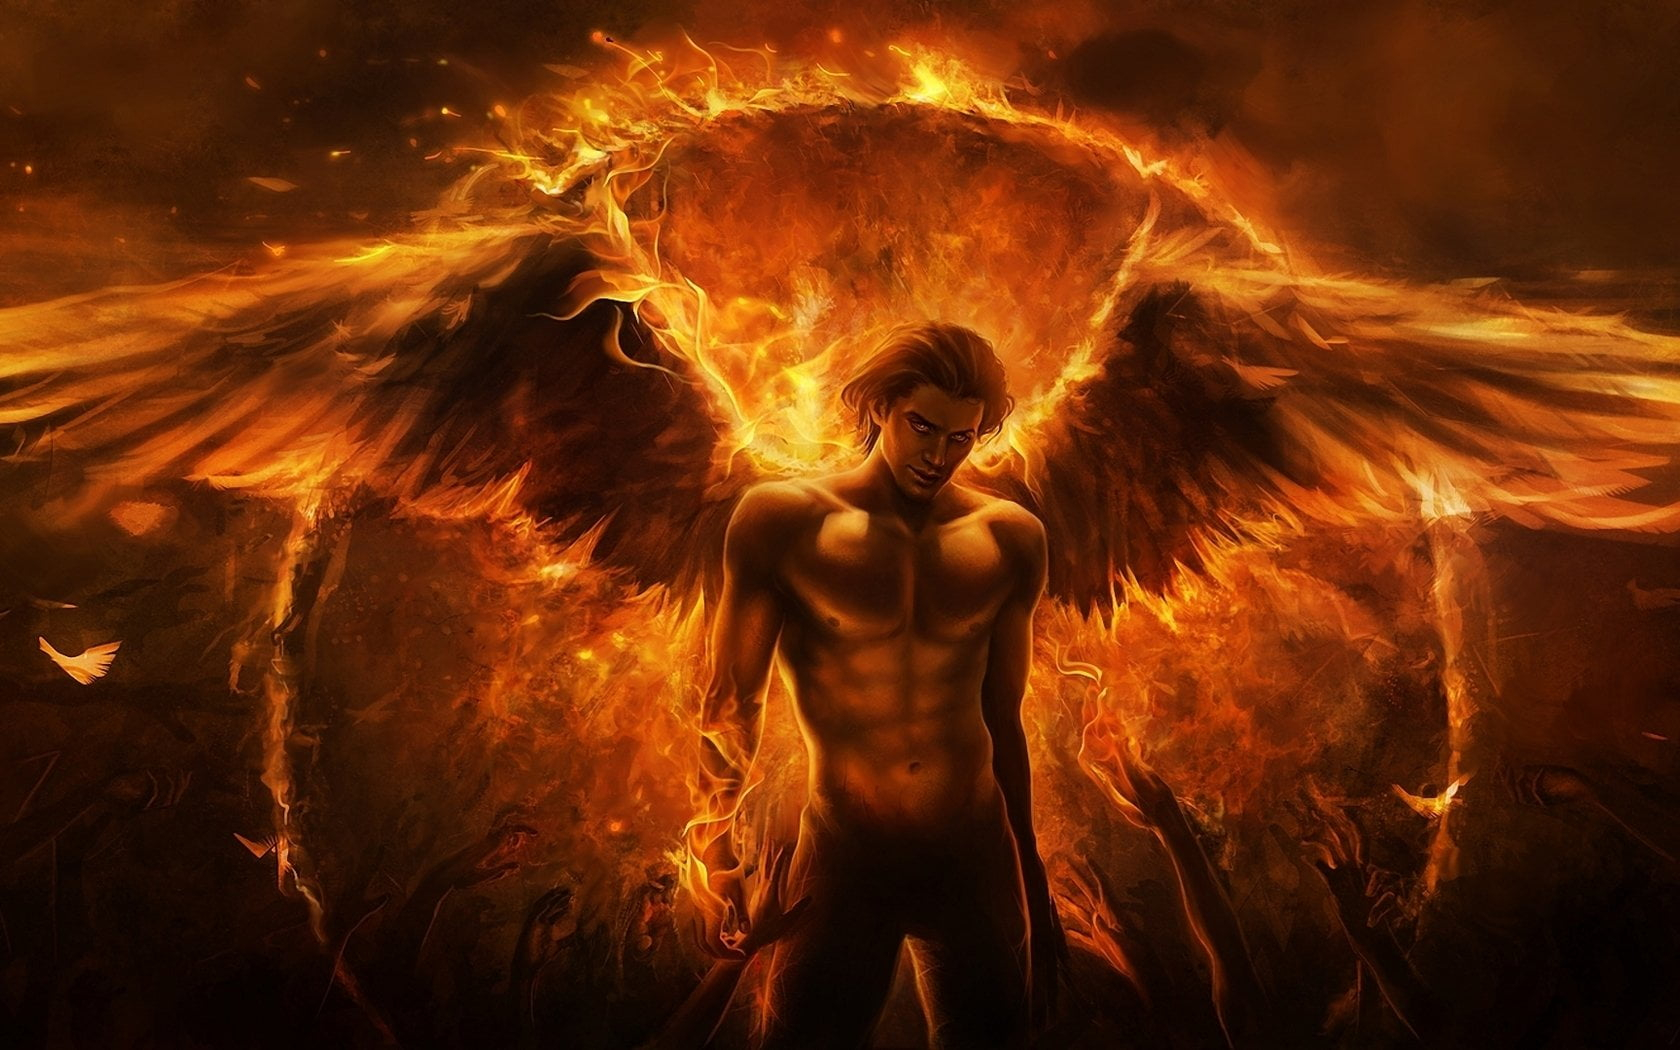 Lucifer illustration, Dark, Angel, Fire, Flame, Hell, Warrior wallpaper